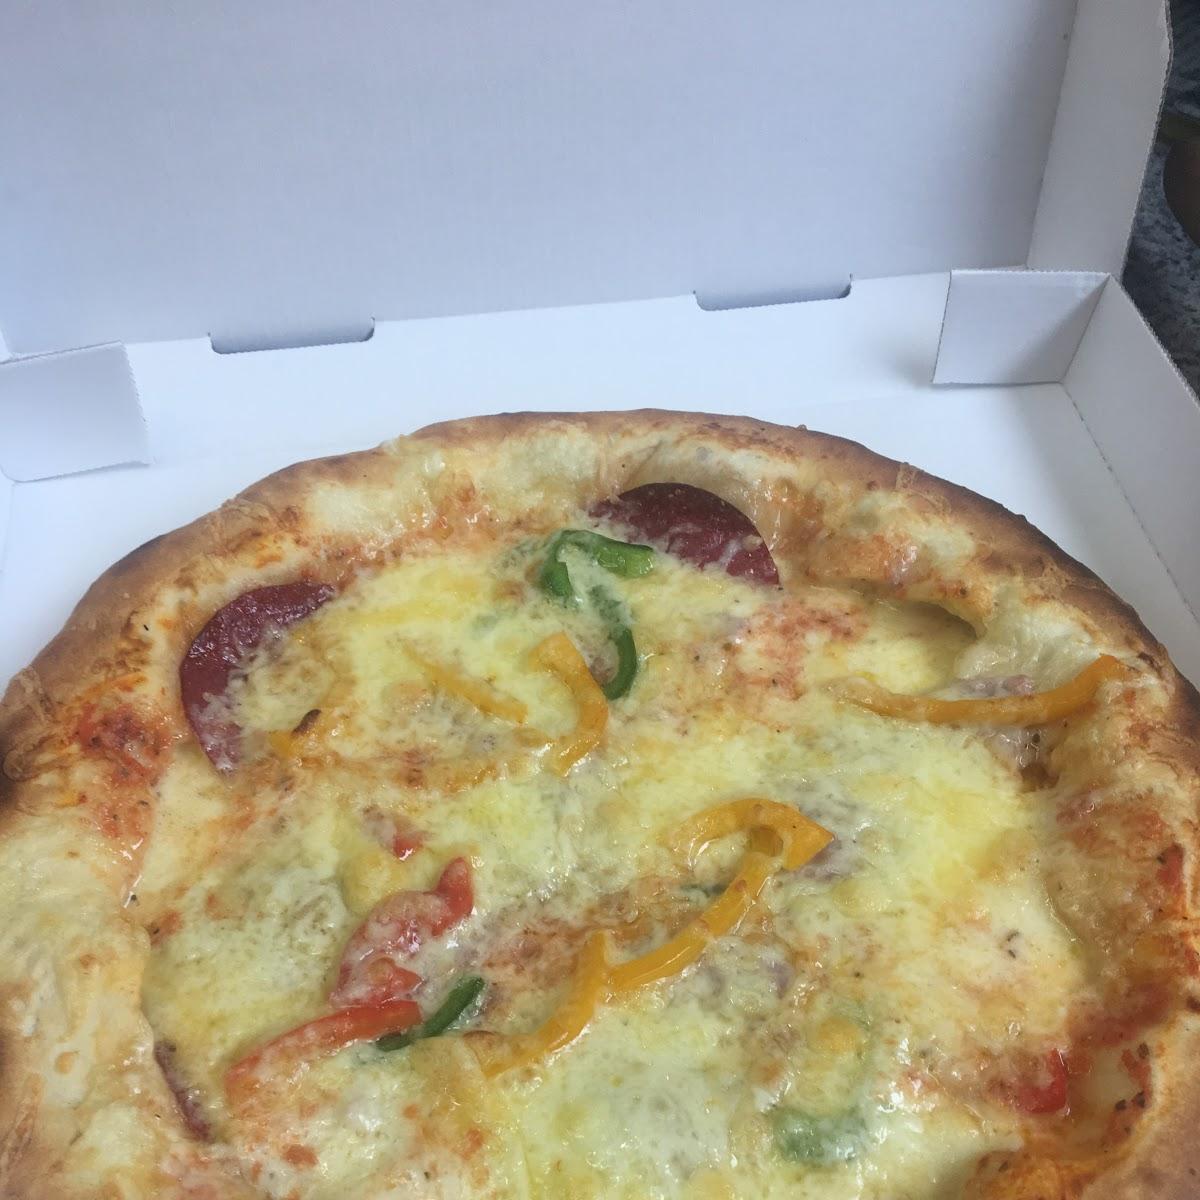 Pizza.day & night